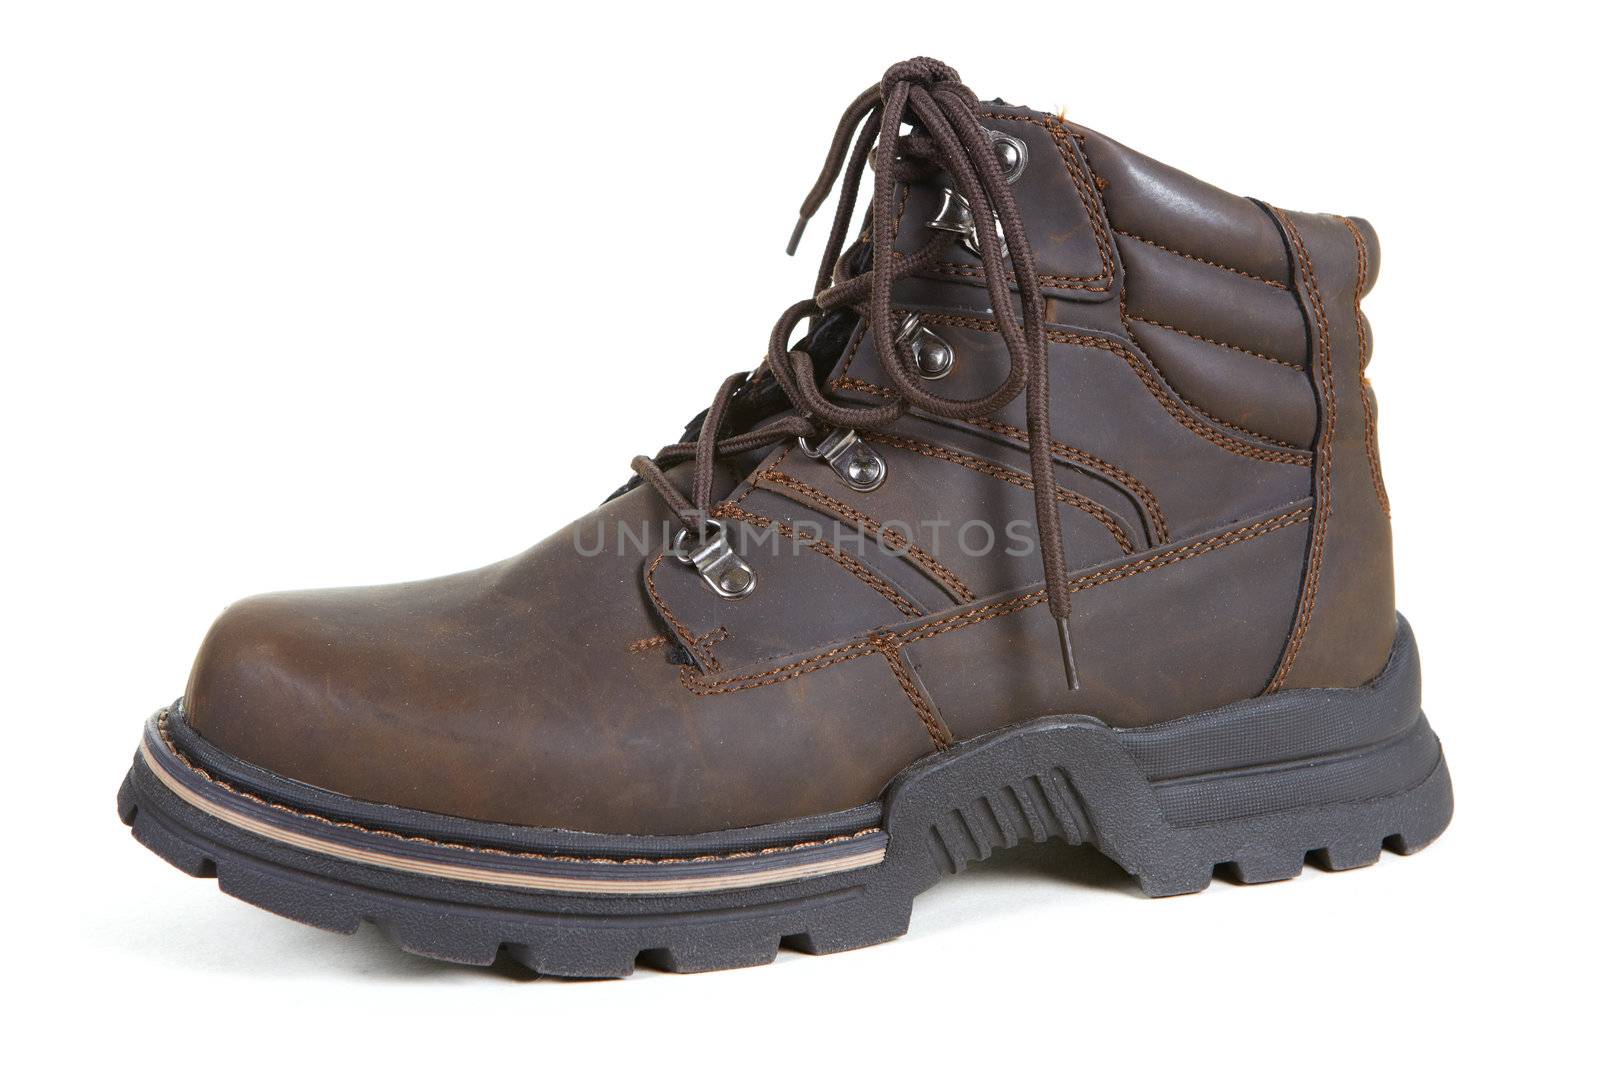 Brown man shoes by petrkurgan